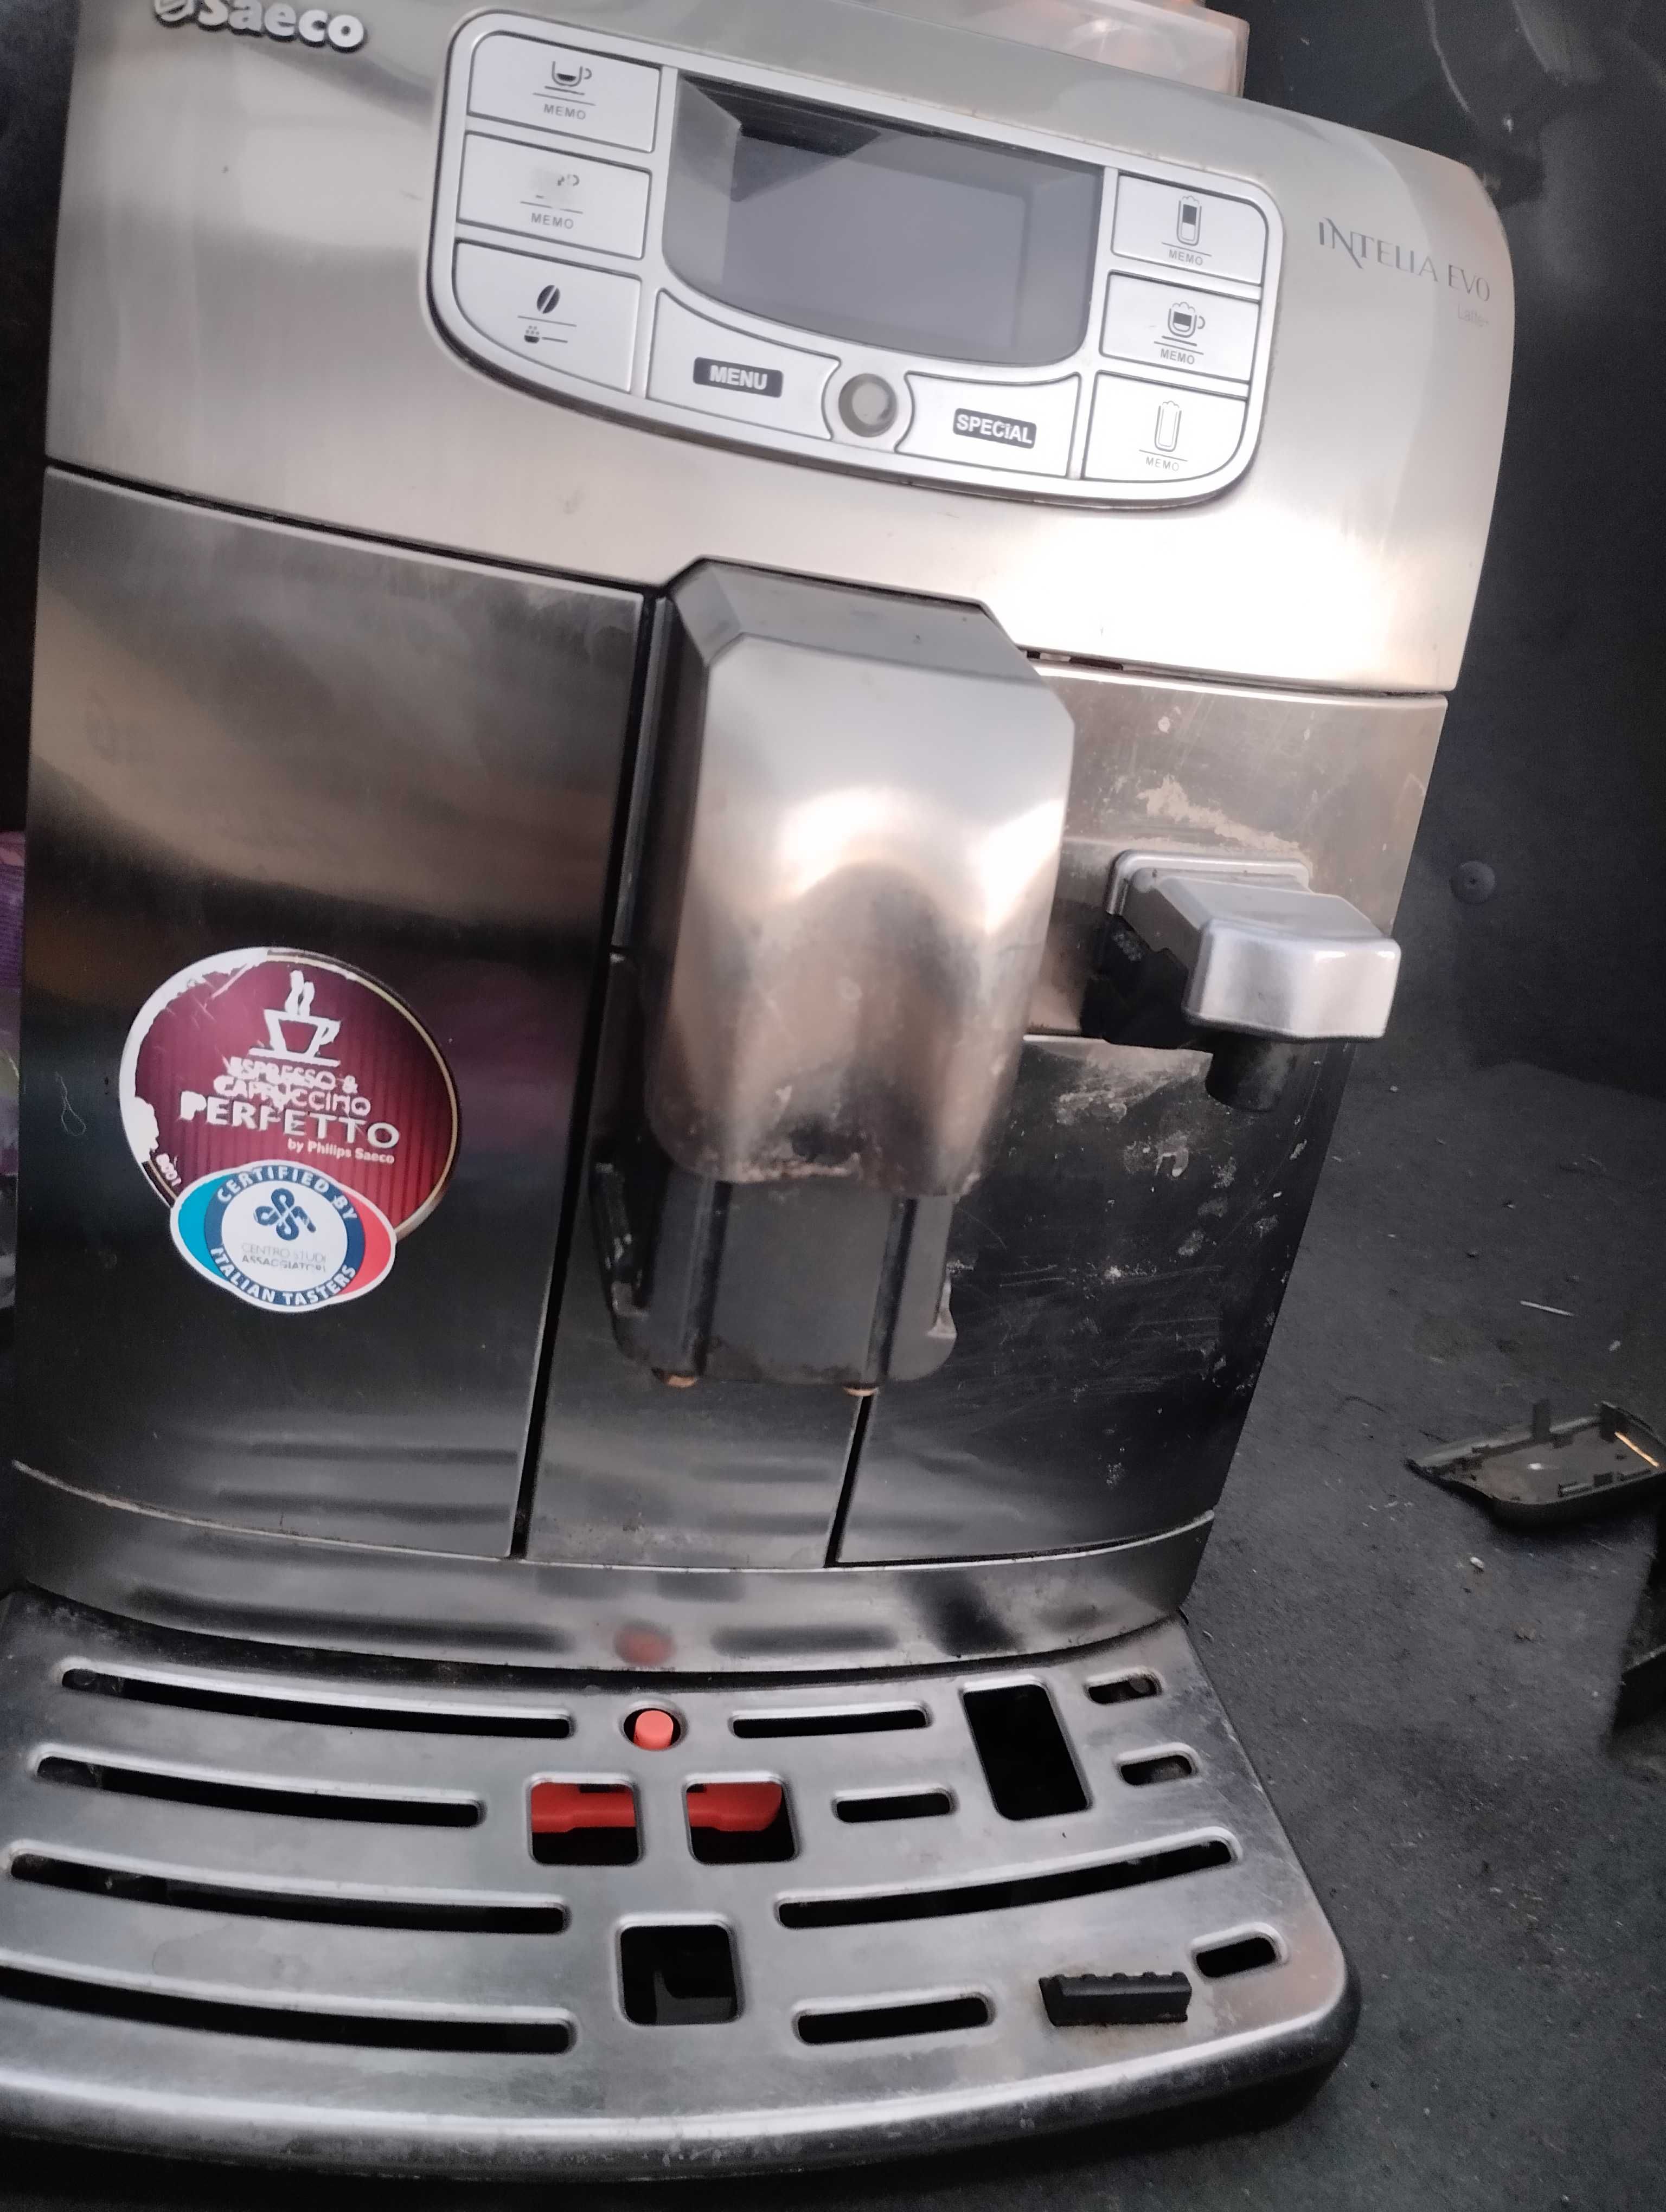 Кафе автомат Филипс саеко